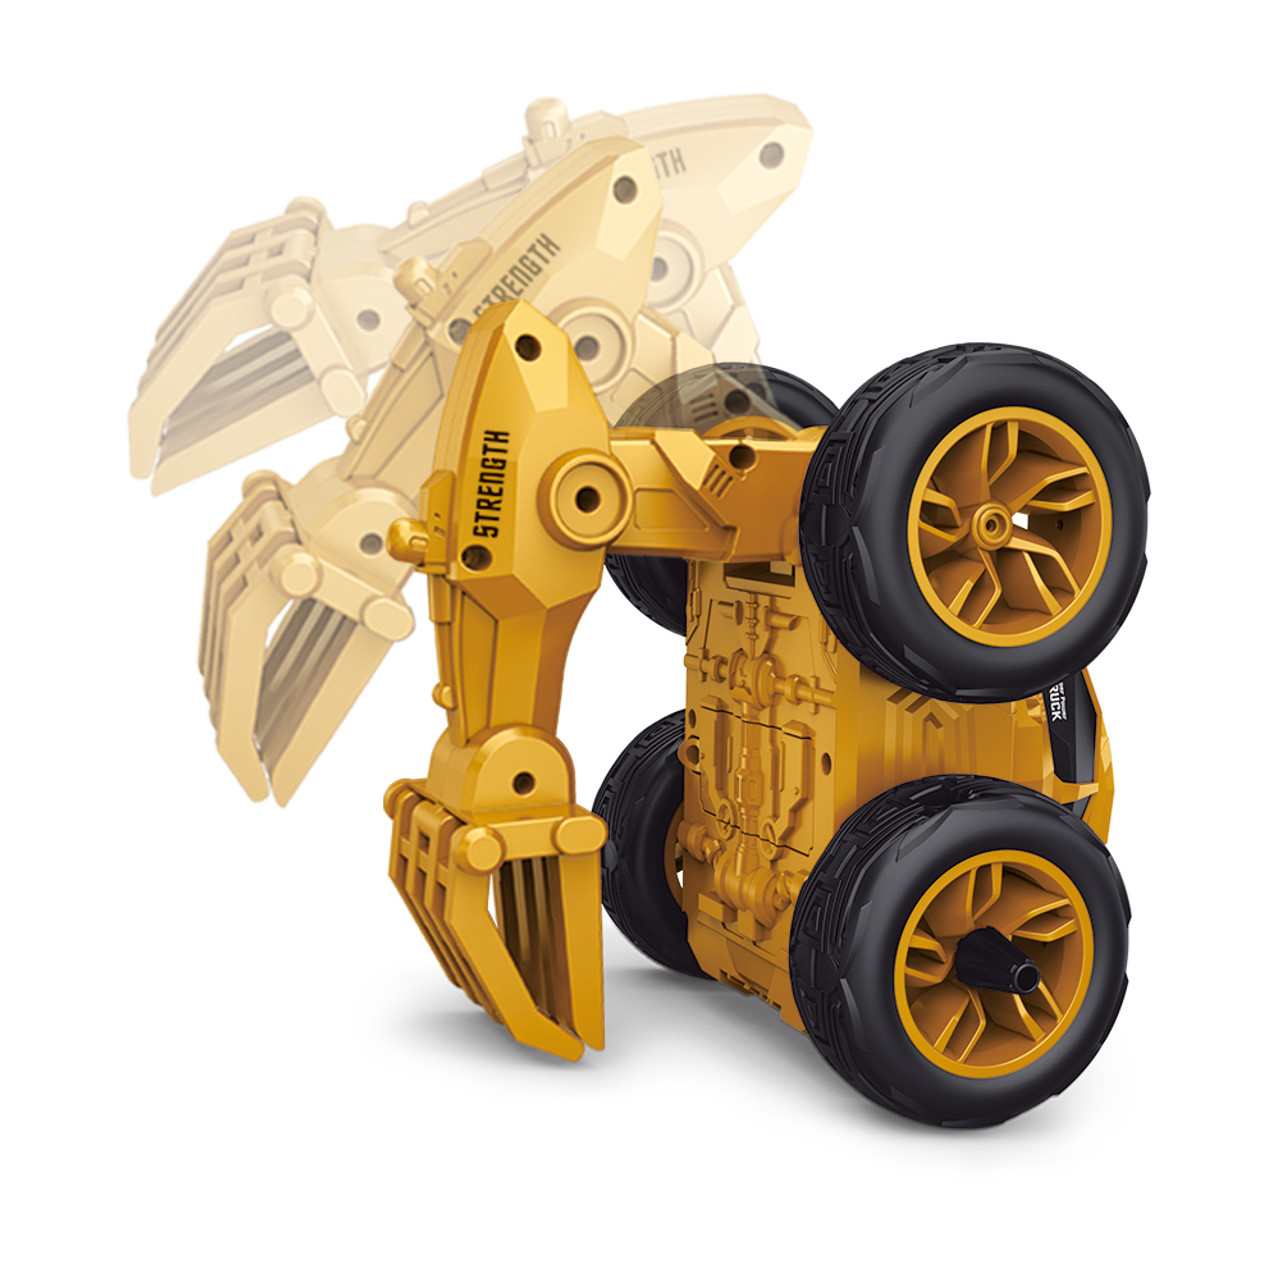 Kids' Remote Control 360-Degree Stunt Trucks & Cars product image